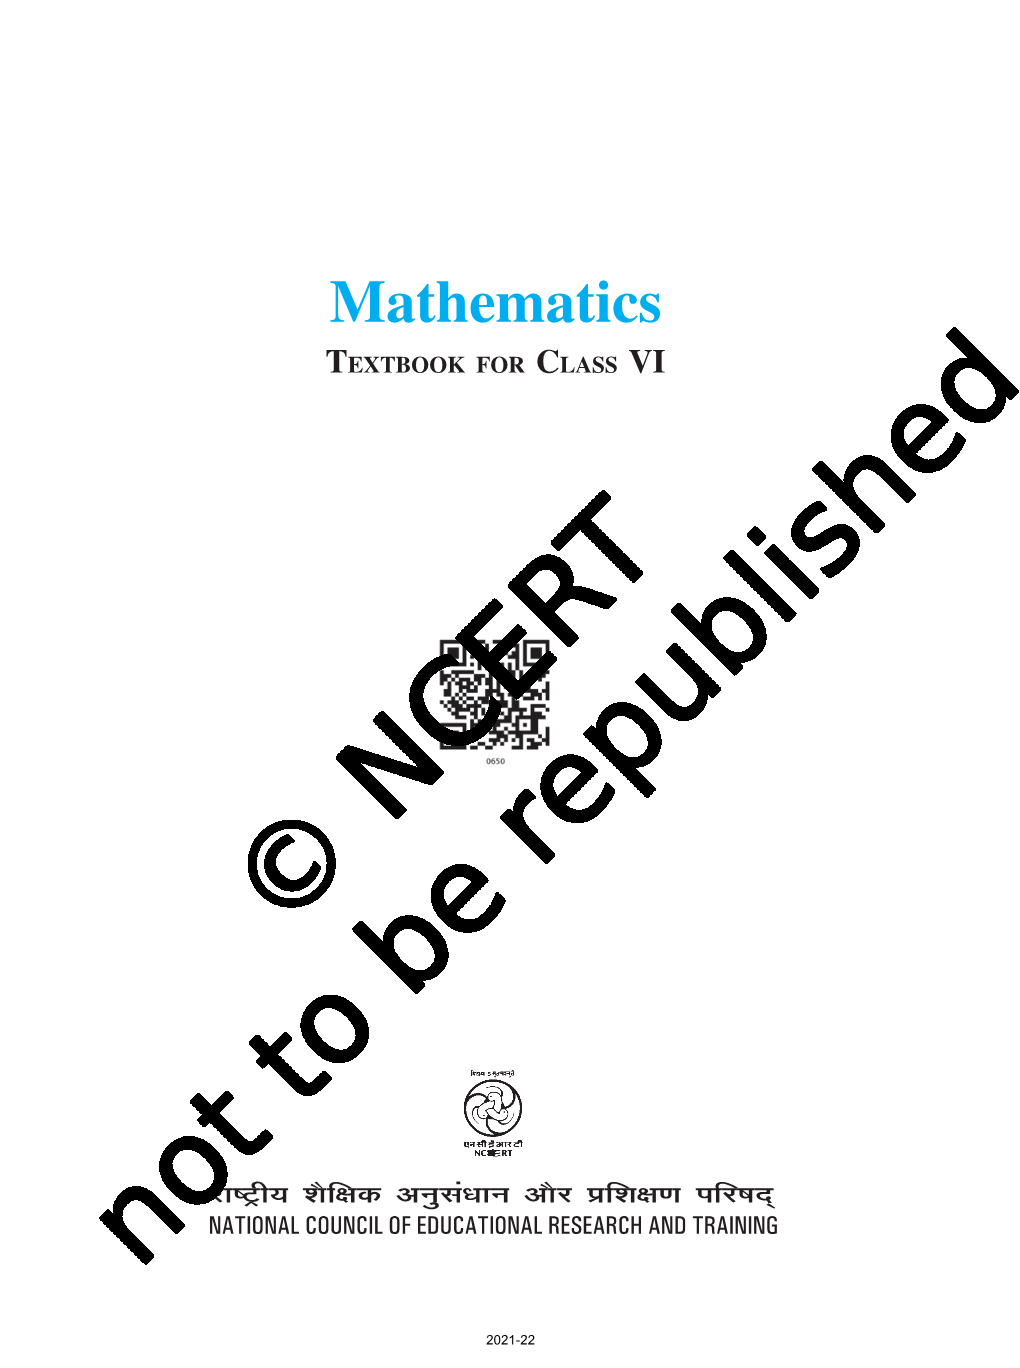 Mathematics TEXTBOOK for CLASS VI